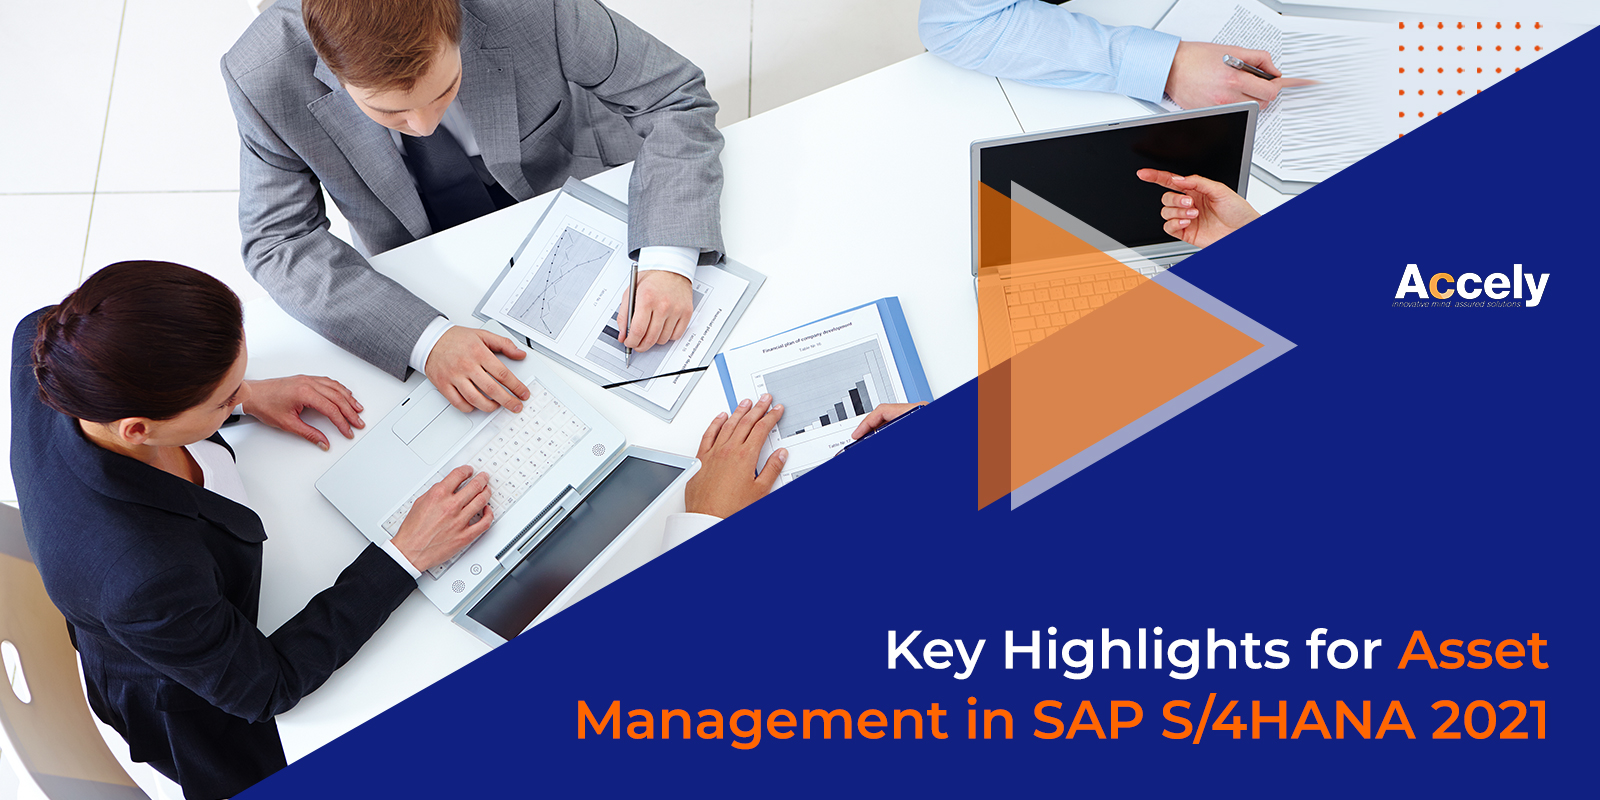 Key Highlights for Asset Management in SAP S/4HANA 2021